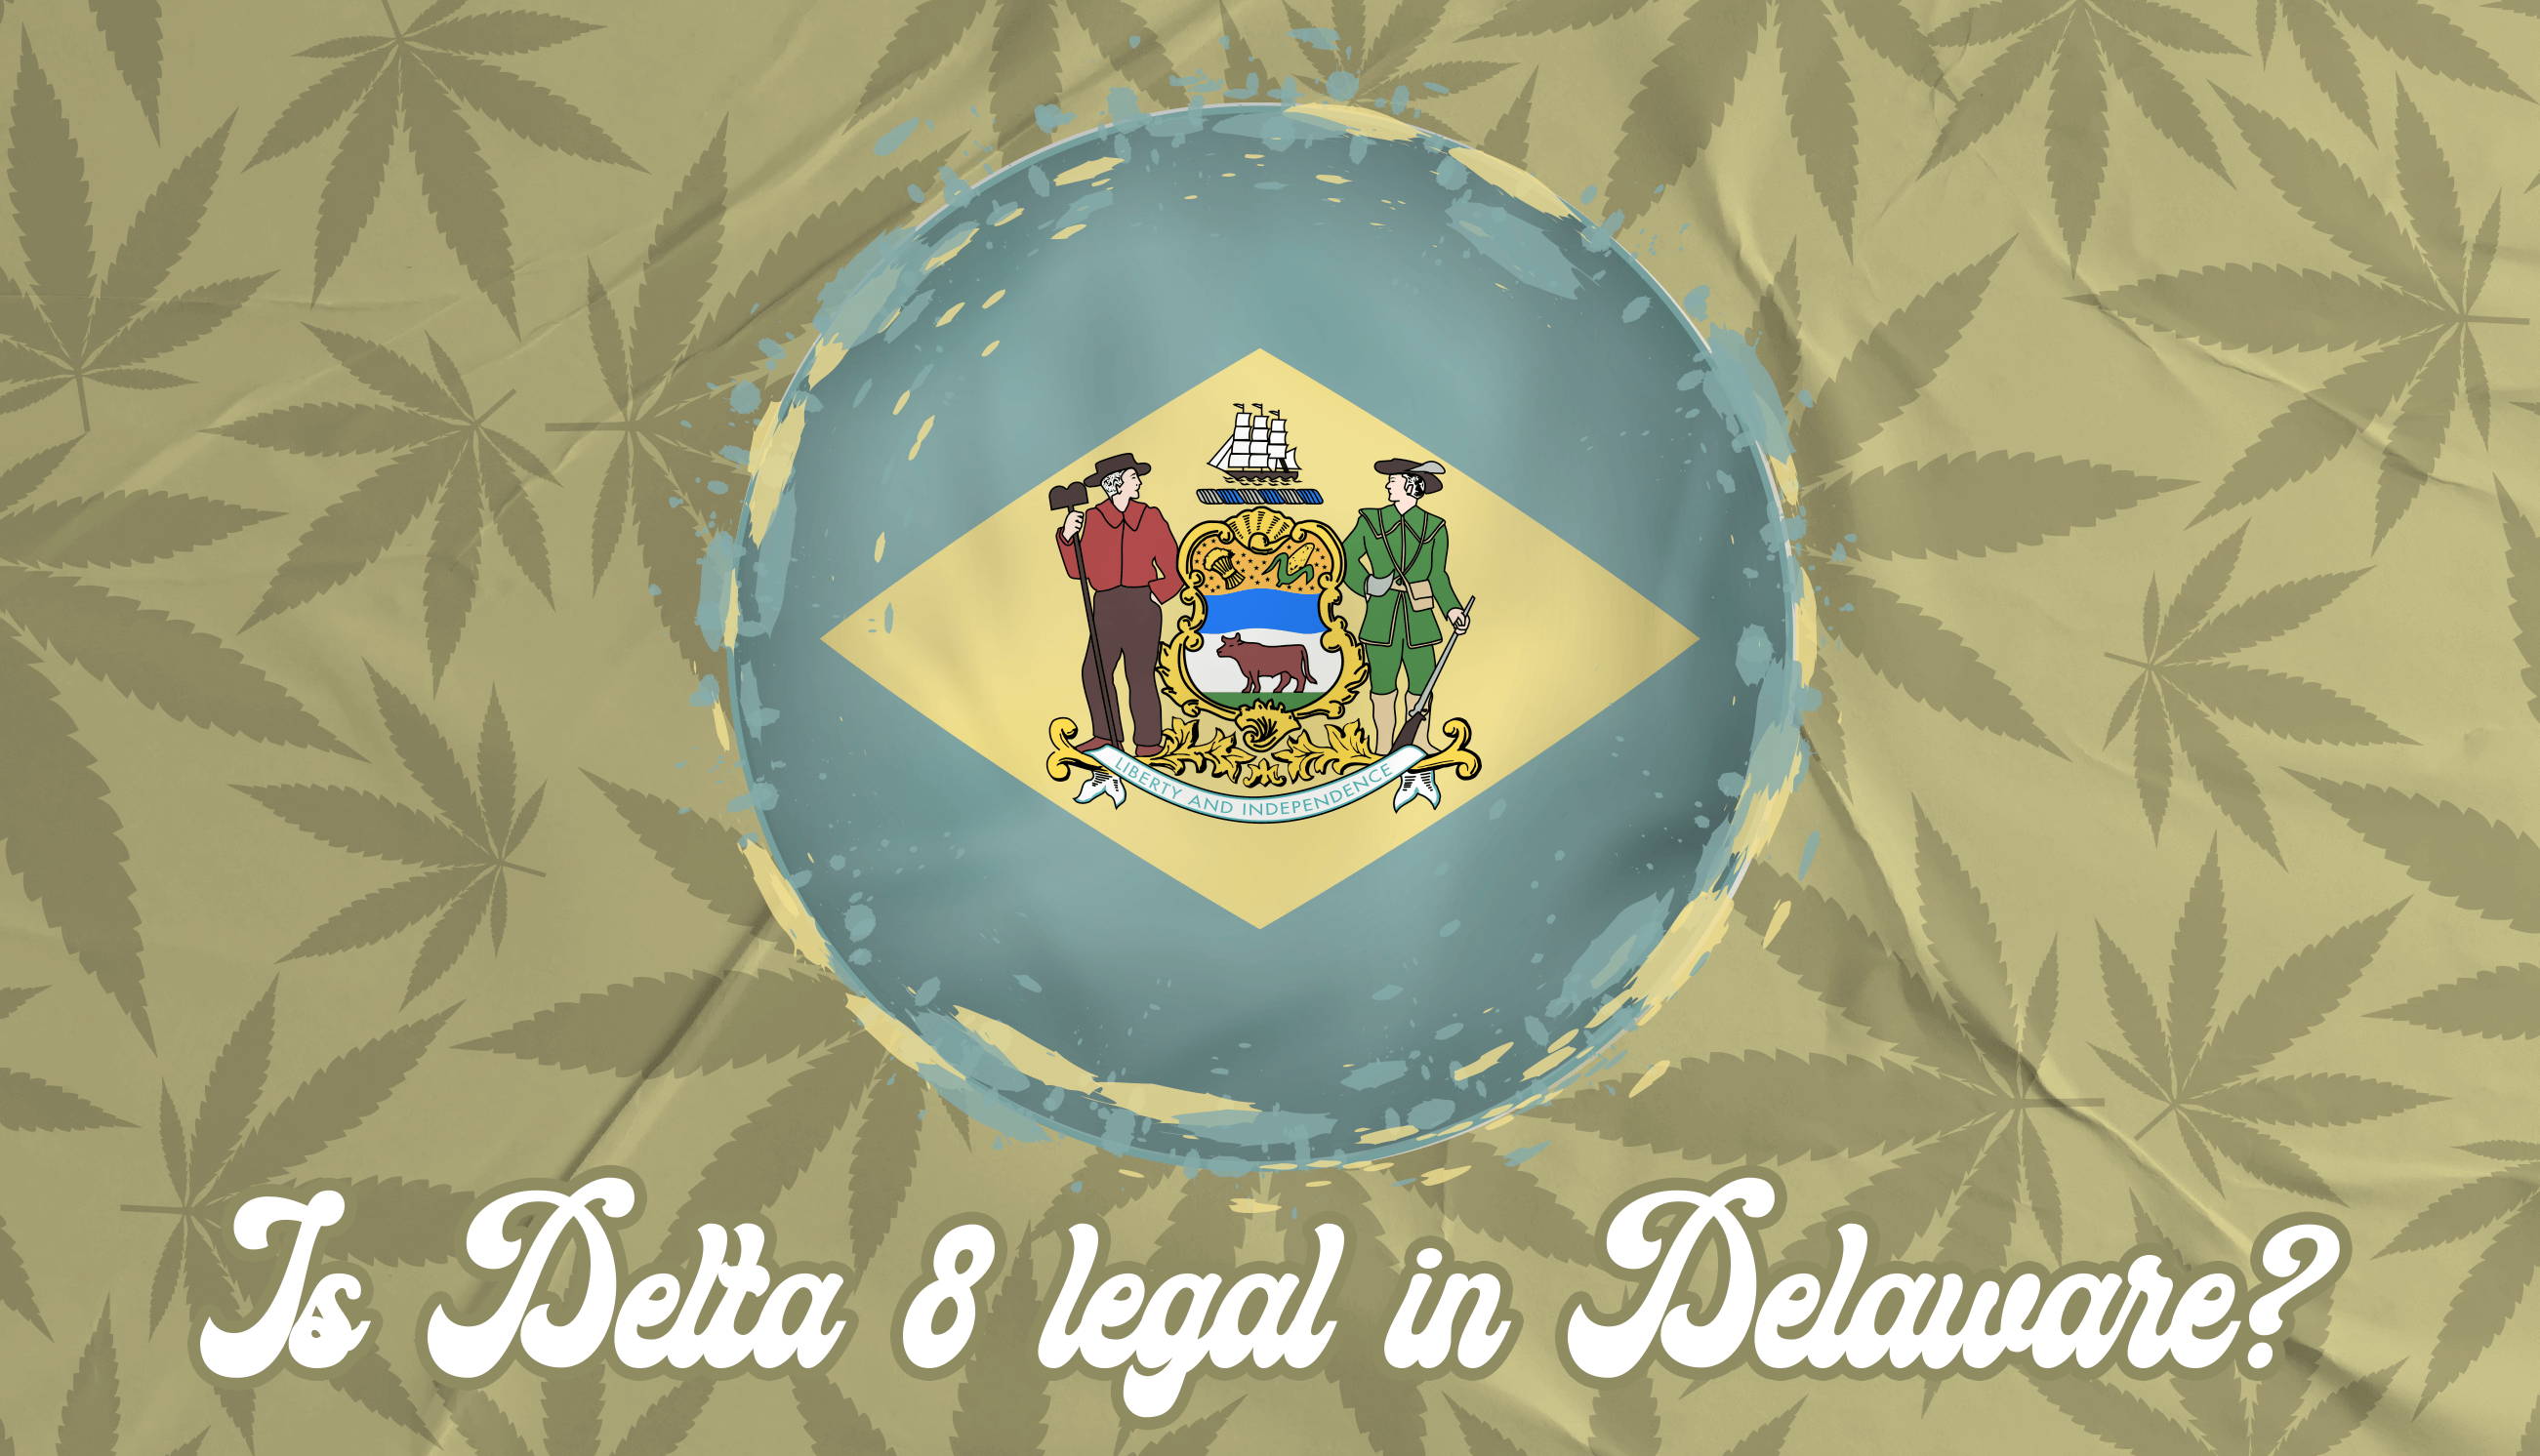 Is Delta 8 legal in Delaware